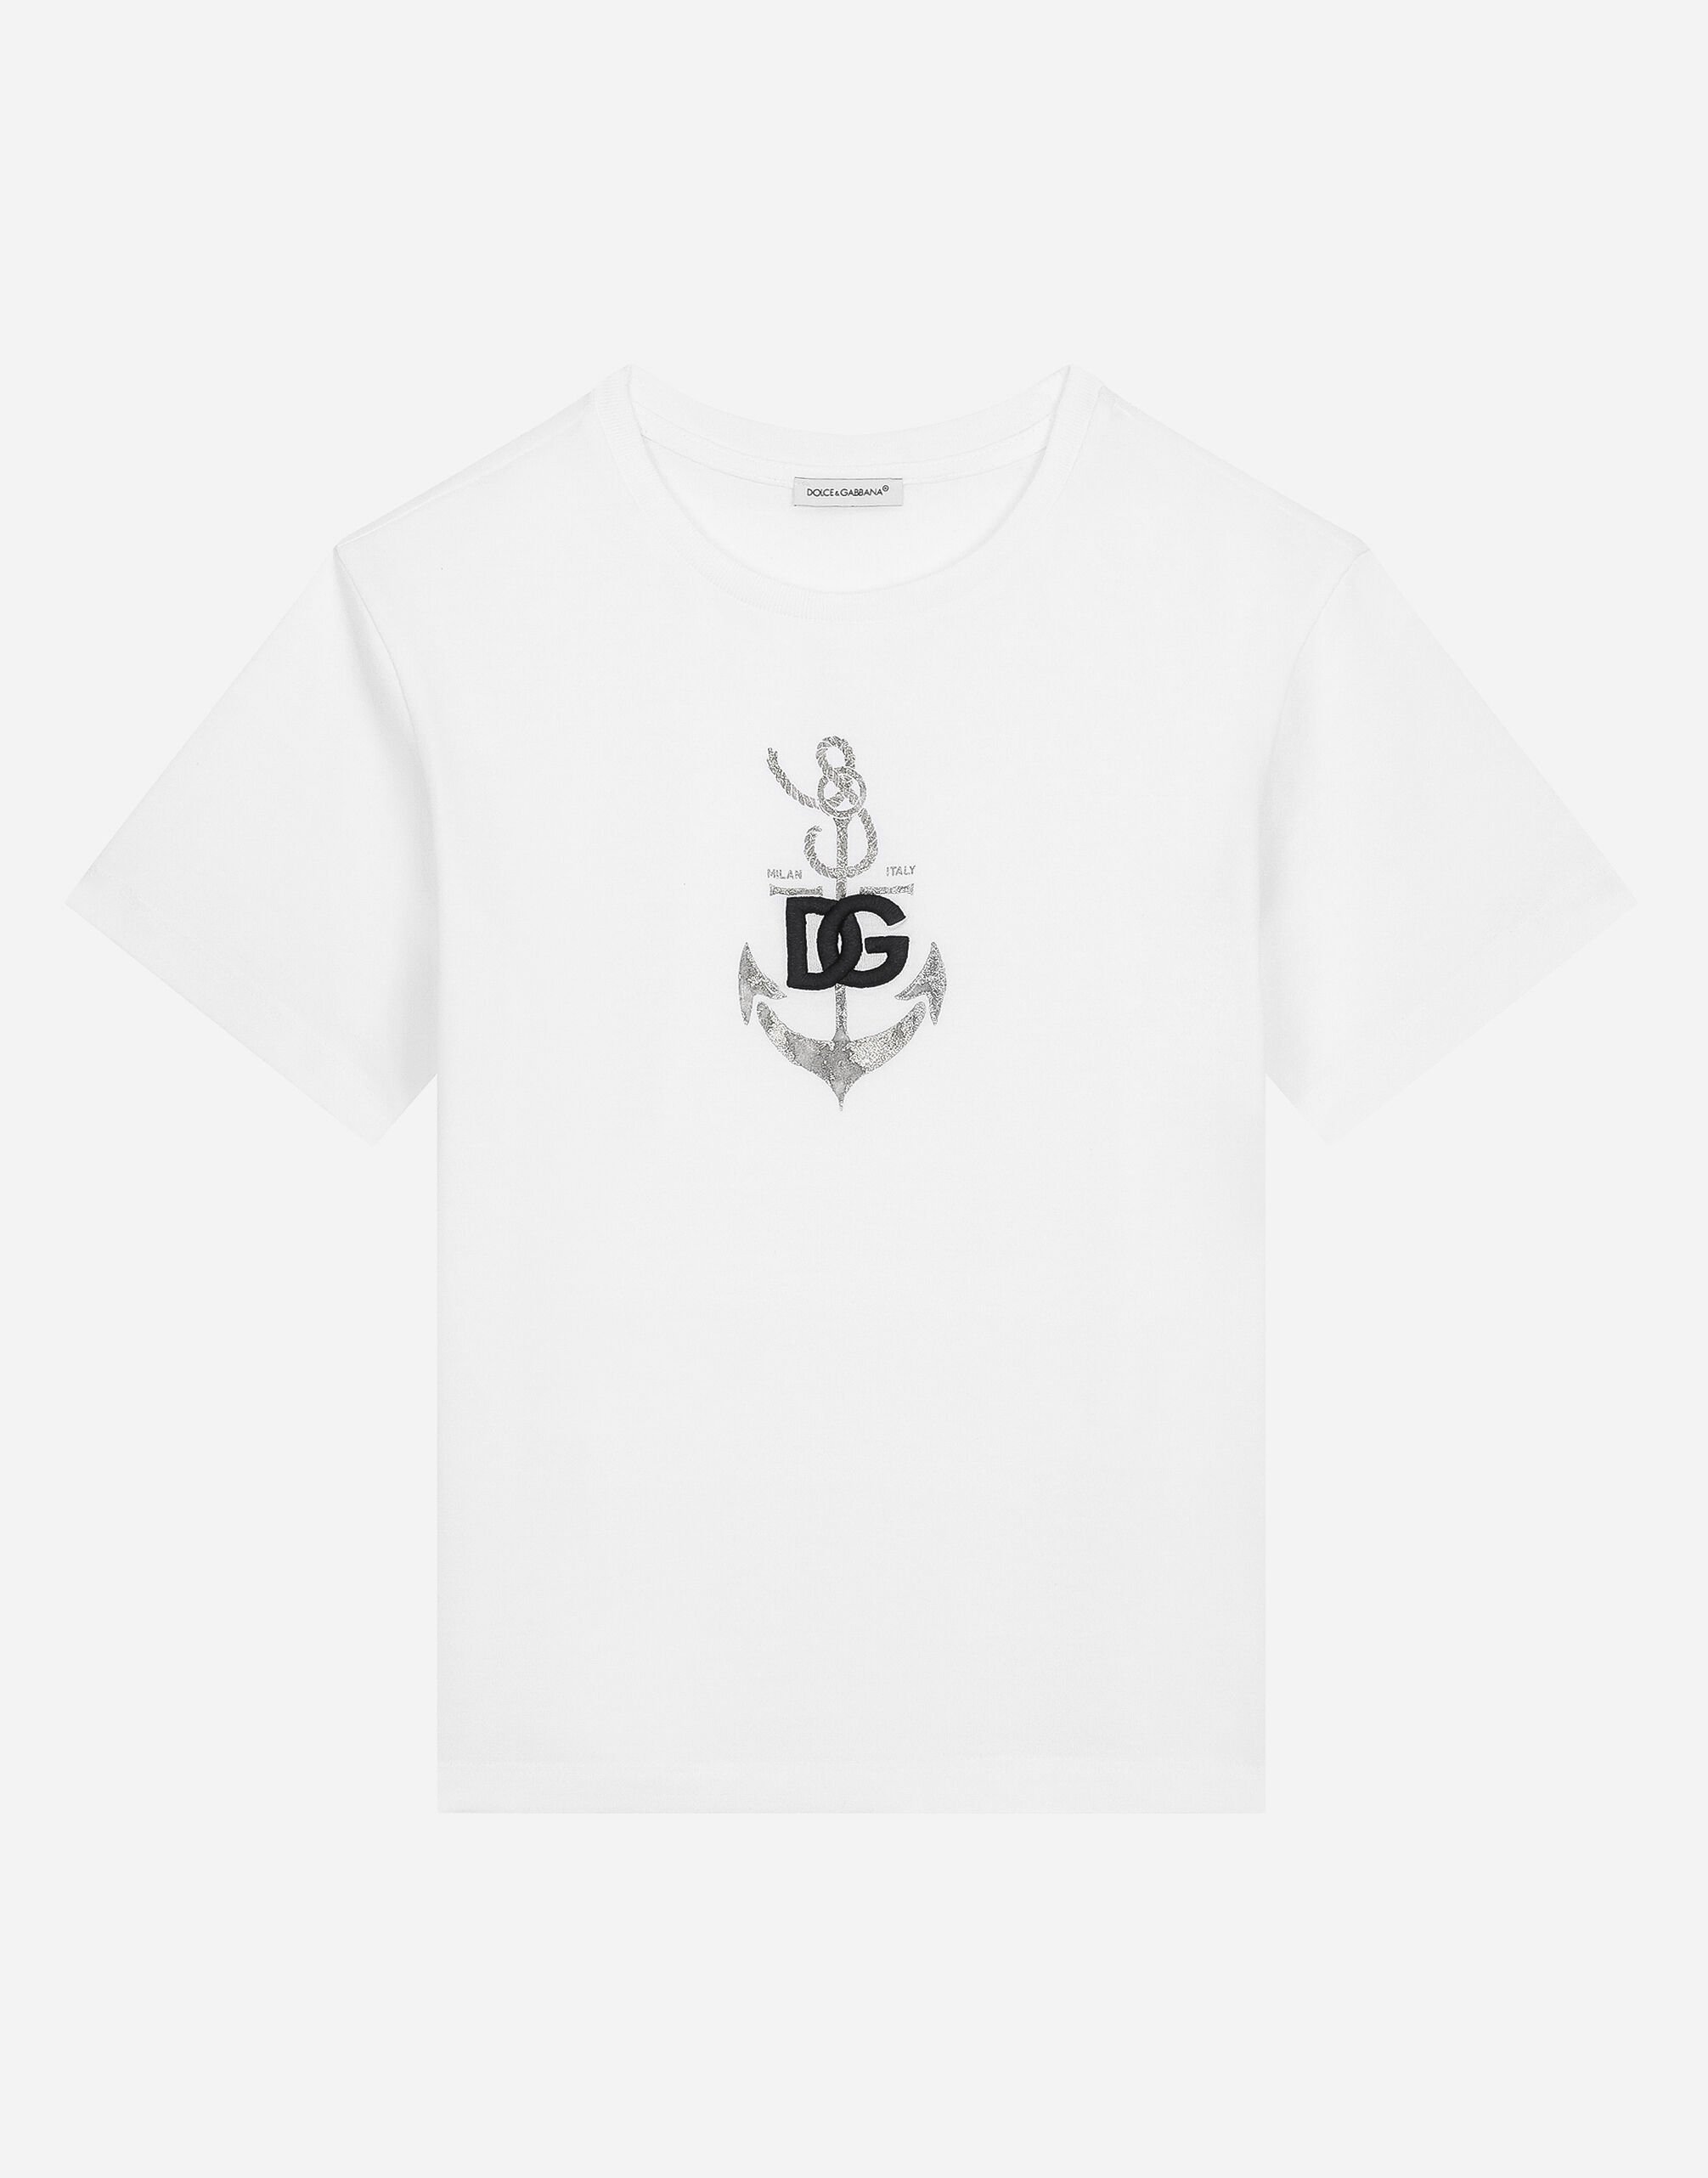 Dolce & Gabbana Anchor-print jersey T-shirt with DG logo embroidery Print L4JTEYG7K8U